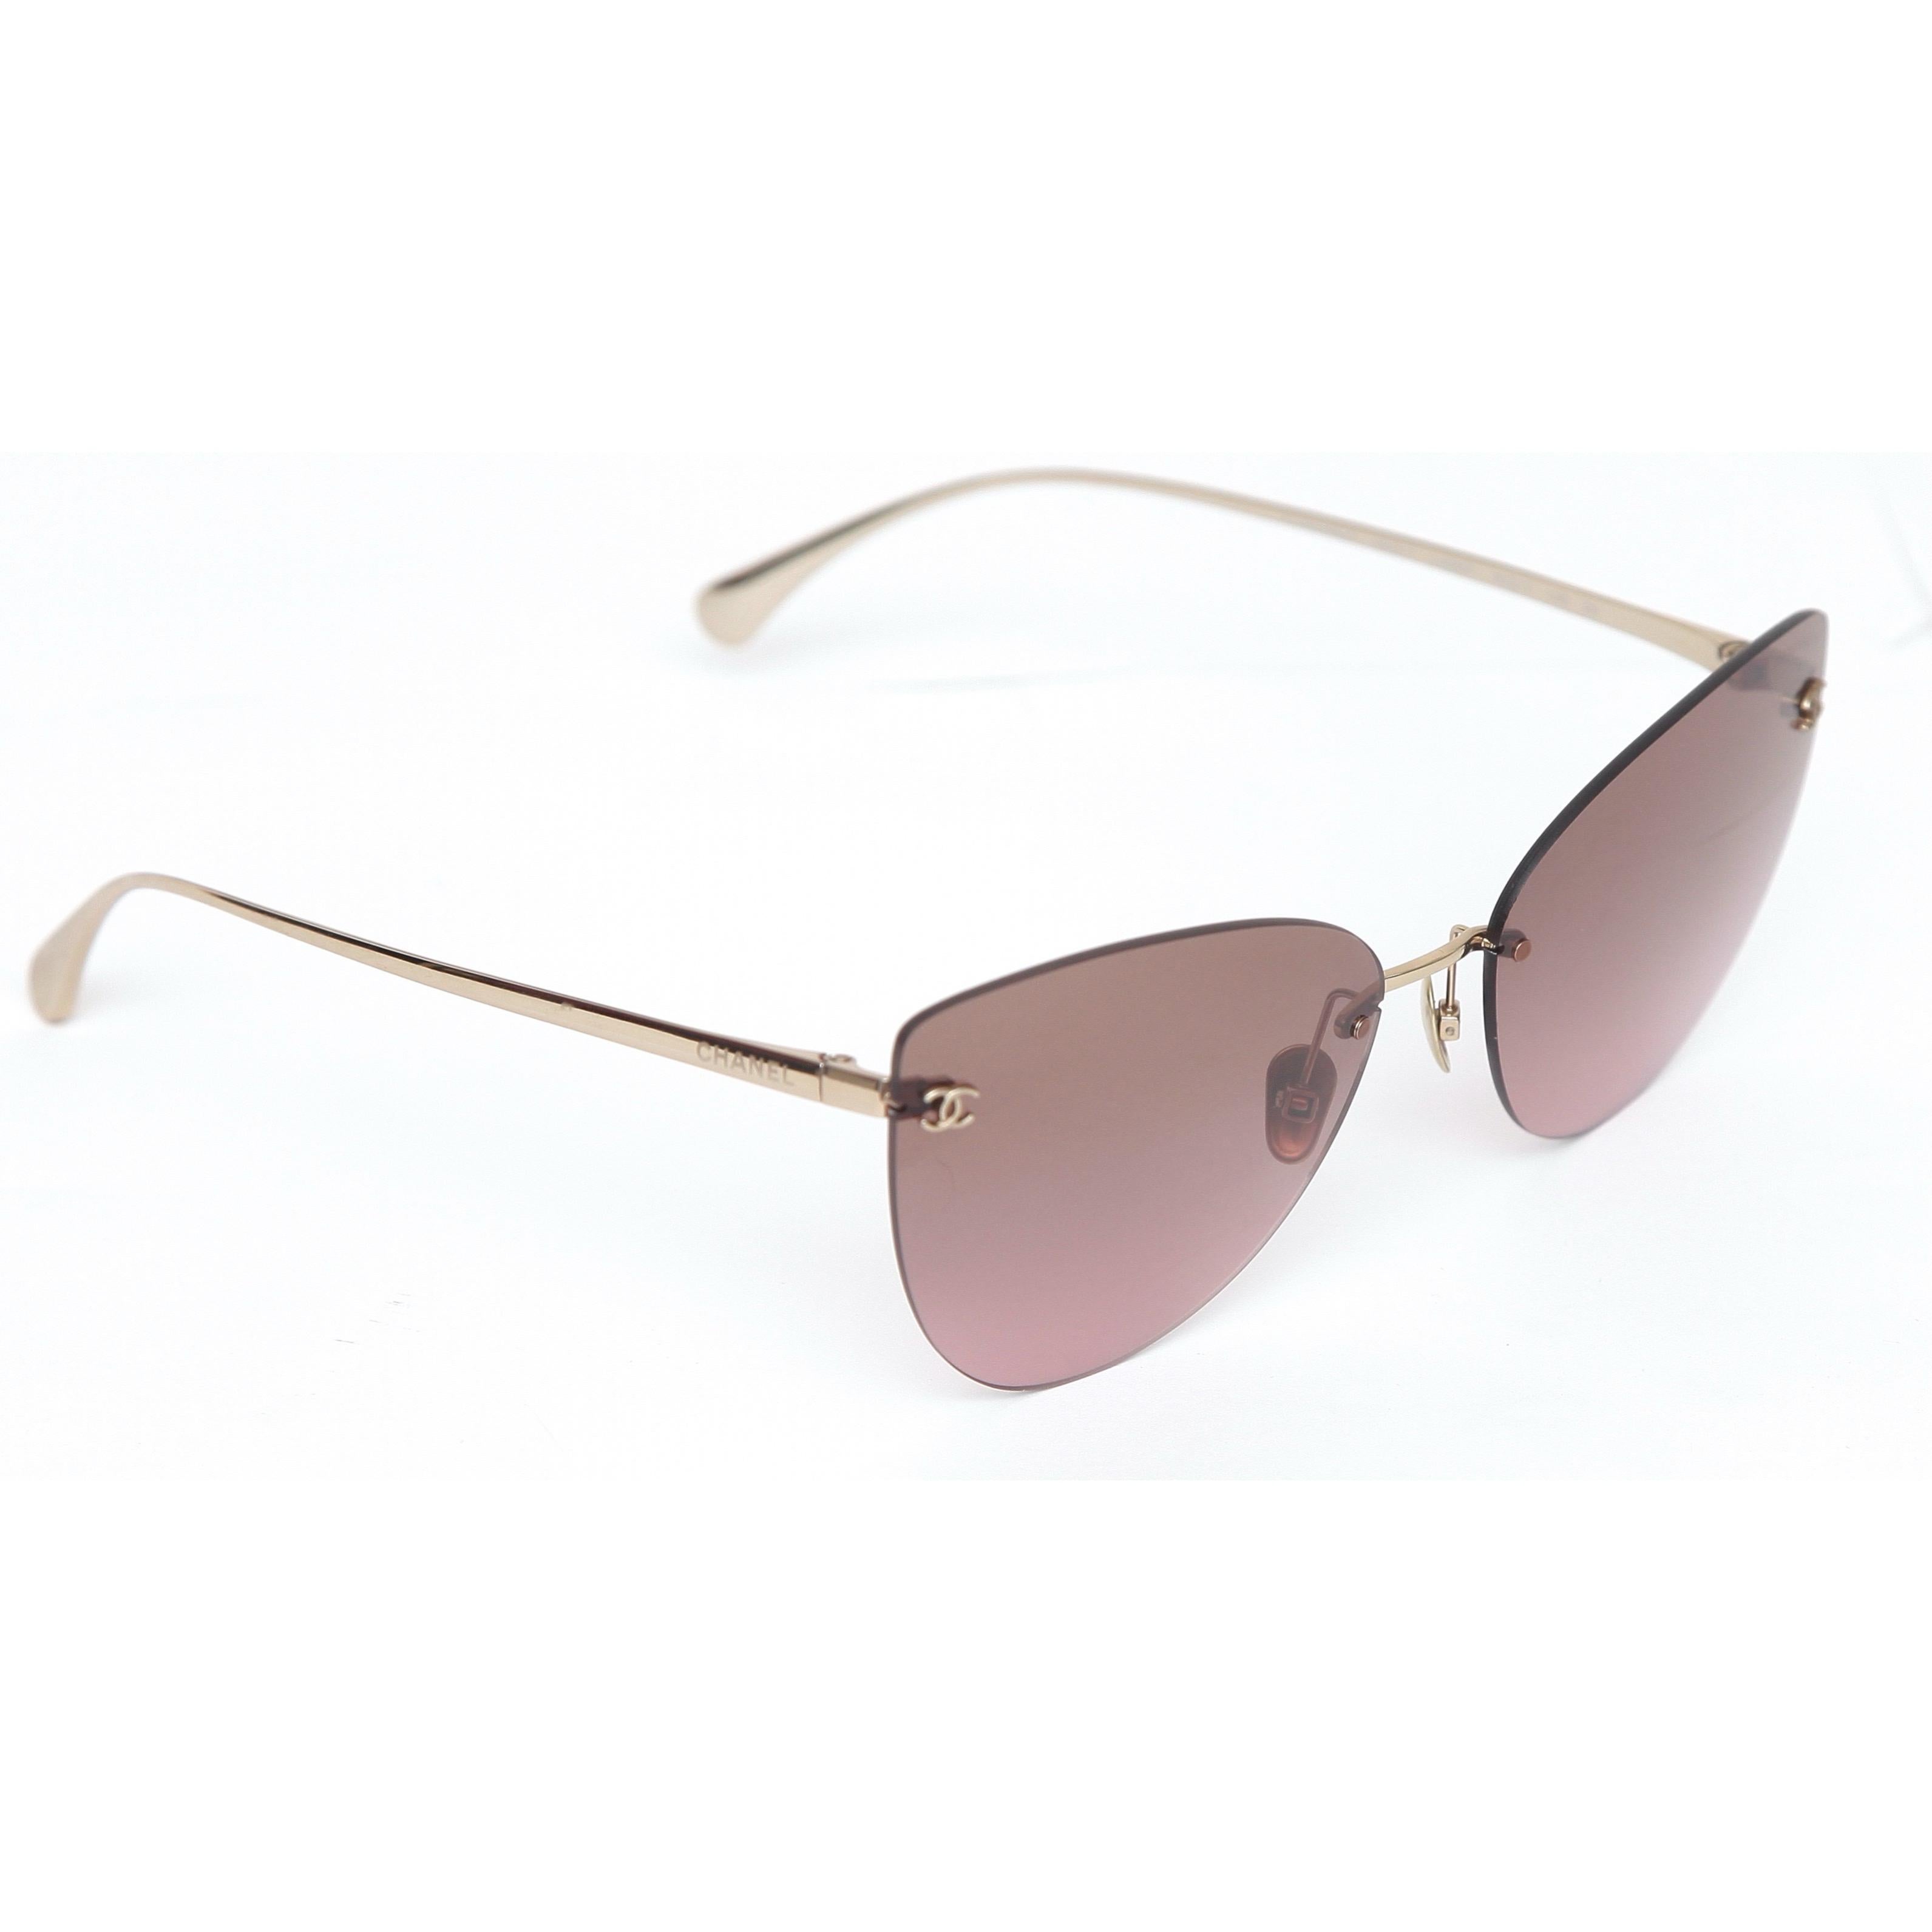 Chanel Cat Eye Sunglasses - 4 For Sale on 1stDibs